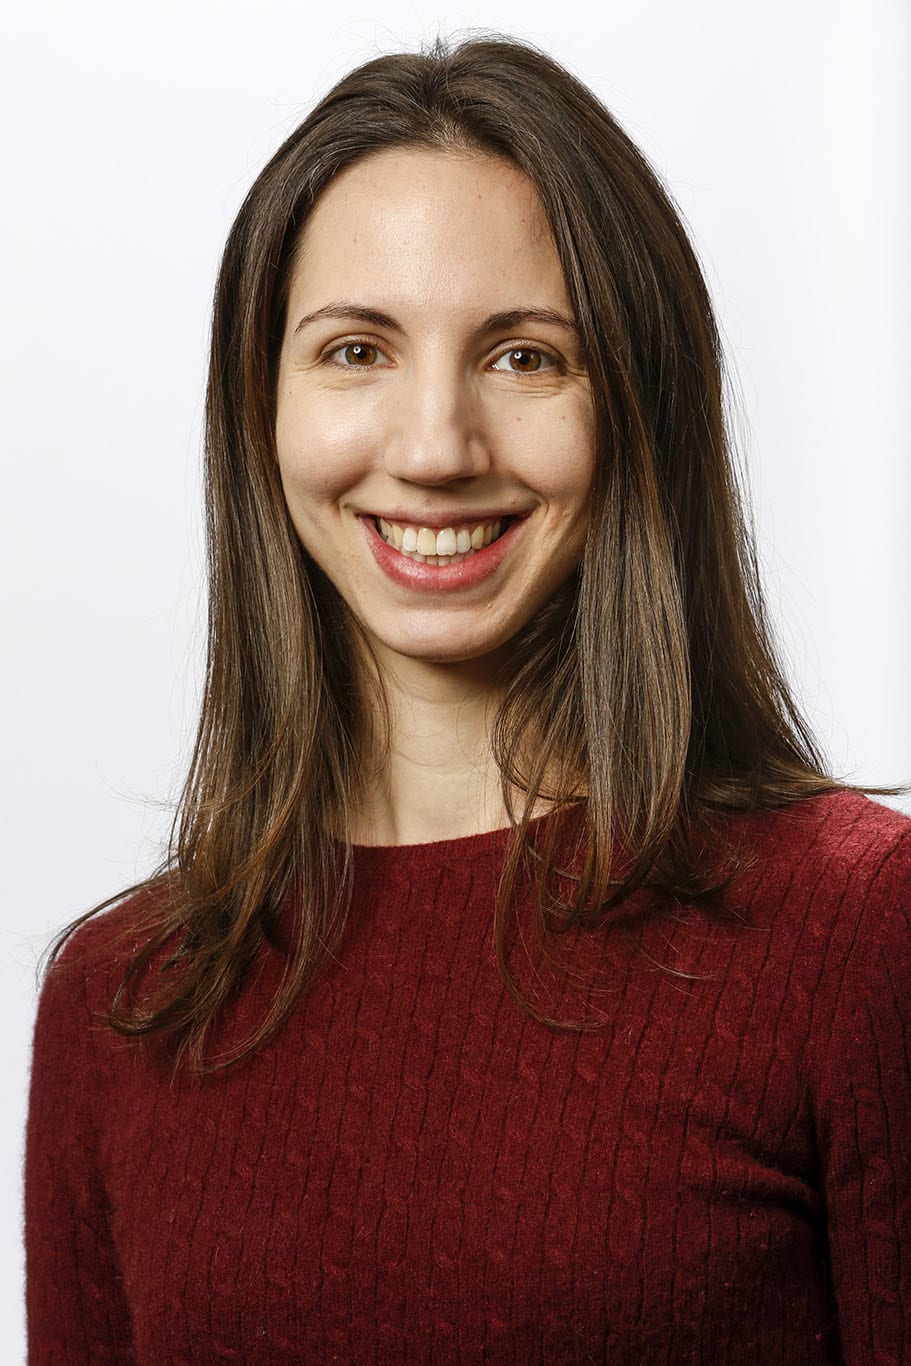 Portrait of Abby Tadenev against a white background.